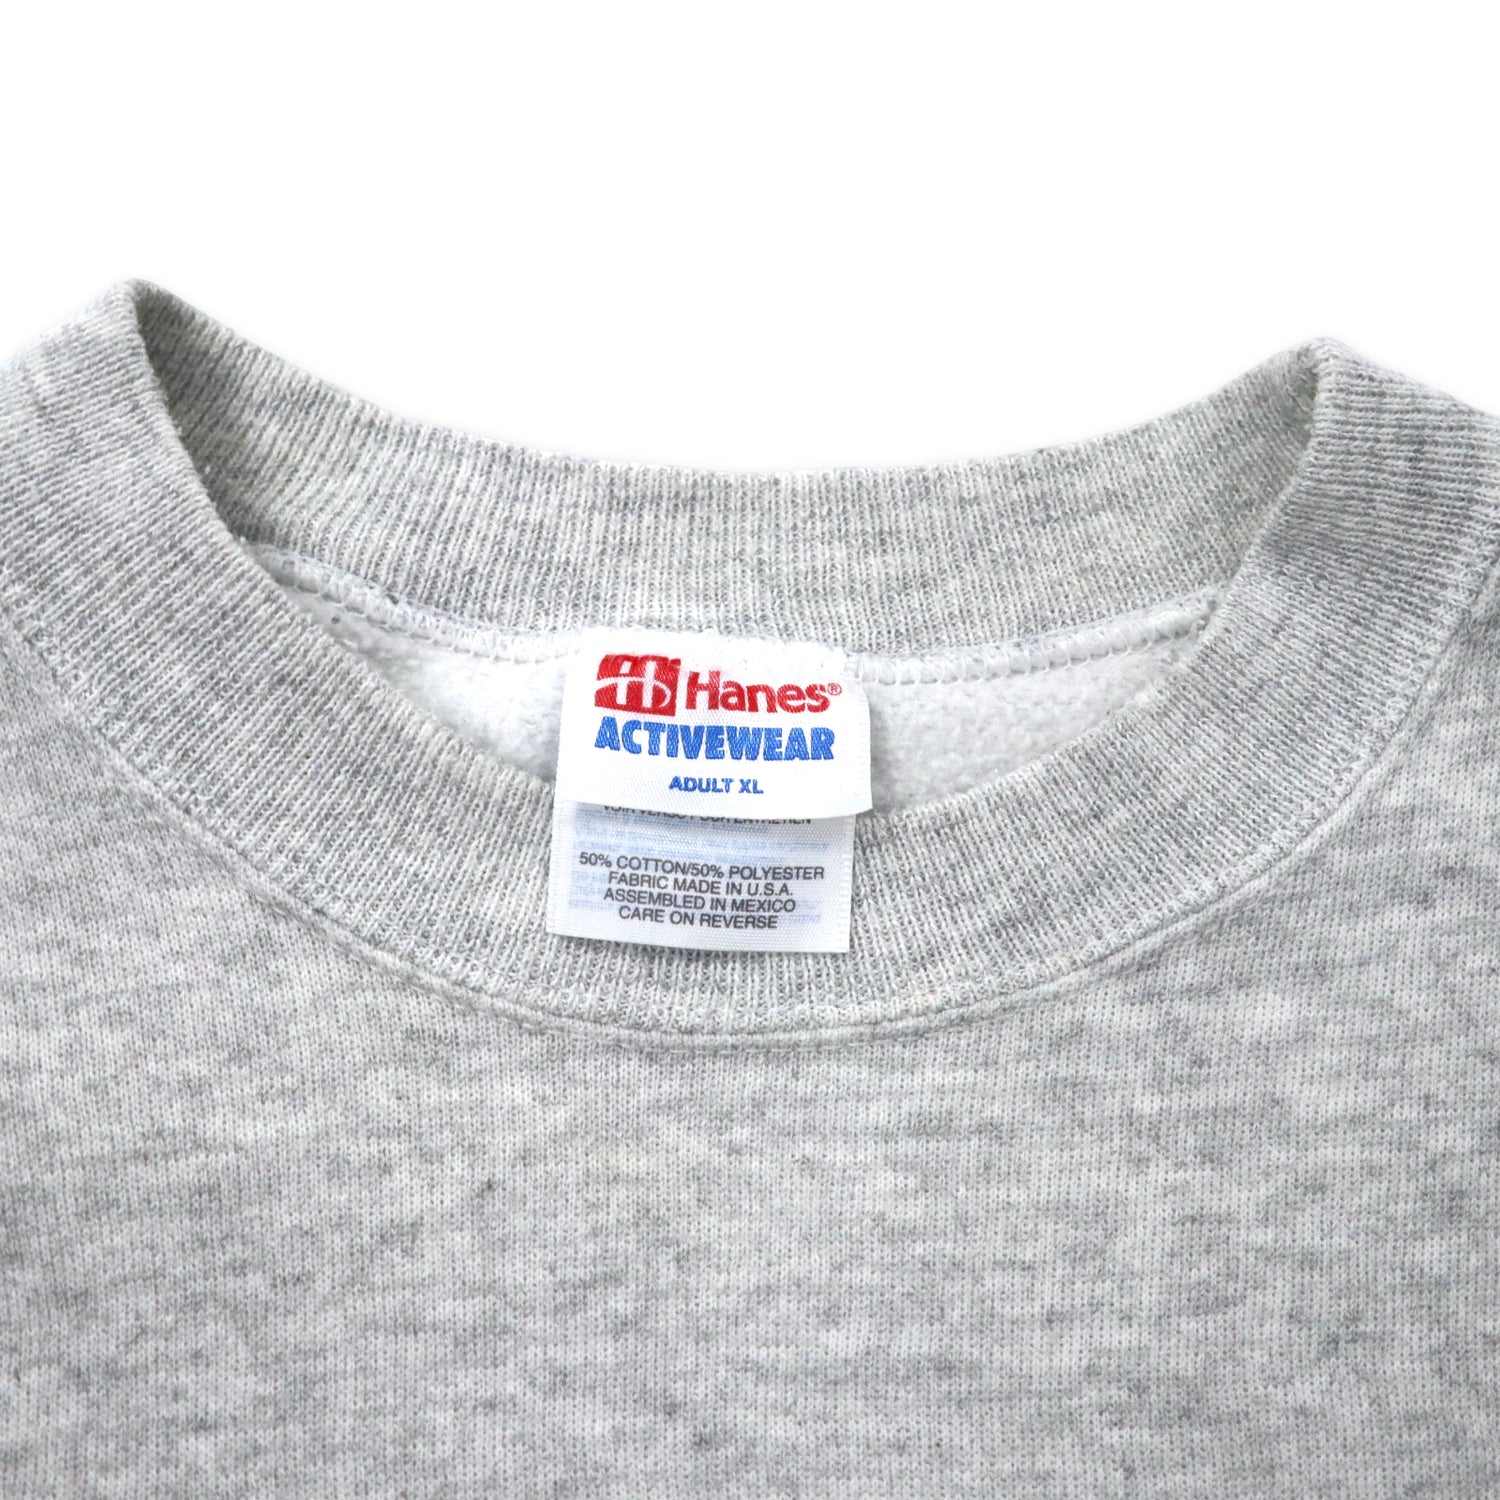 USA Made Hanes ActiveWear s Print Sweatshirt XL Gray Cotton